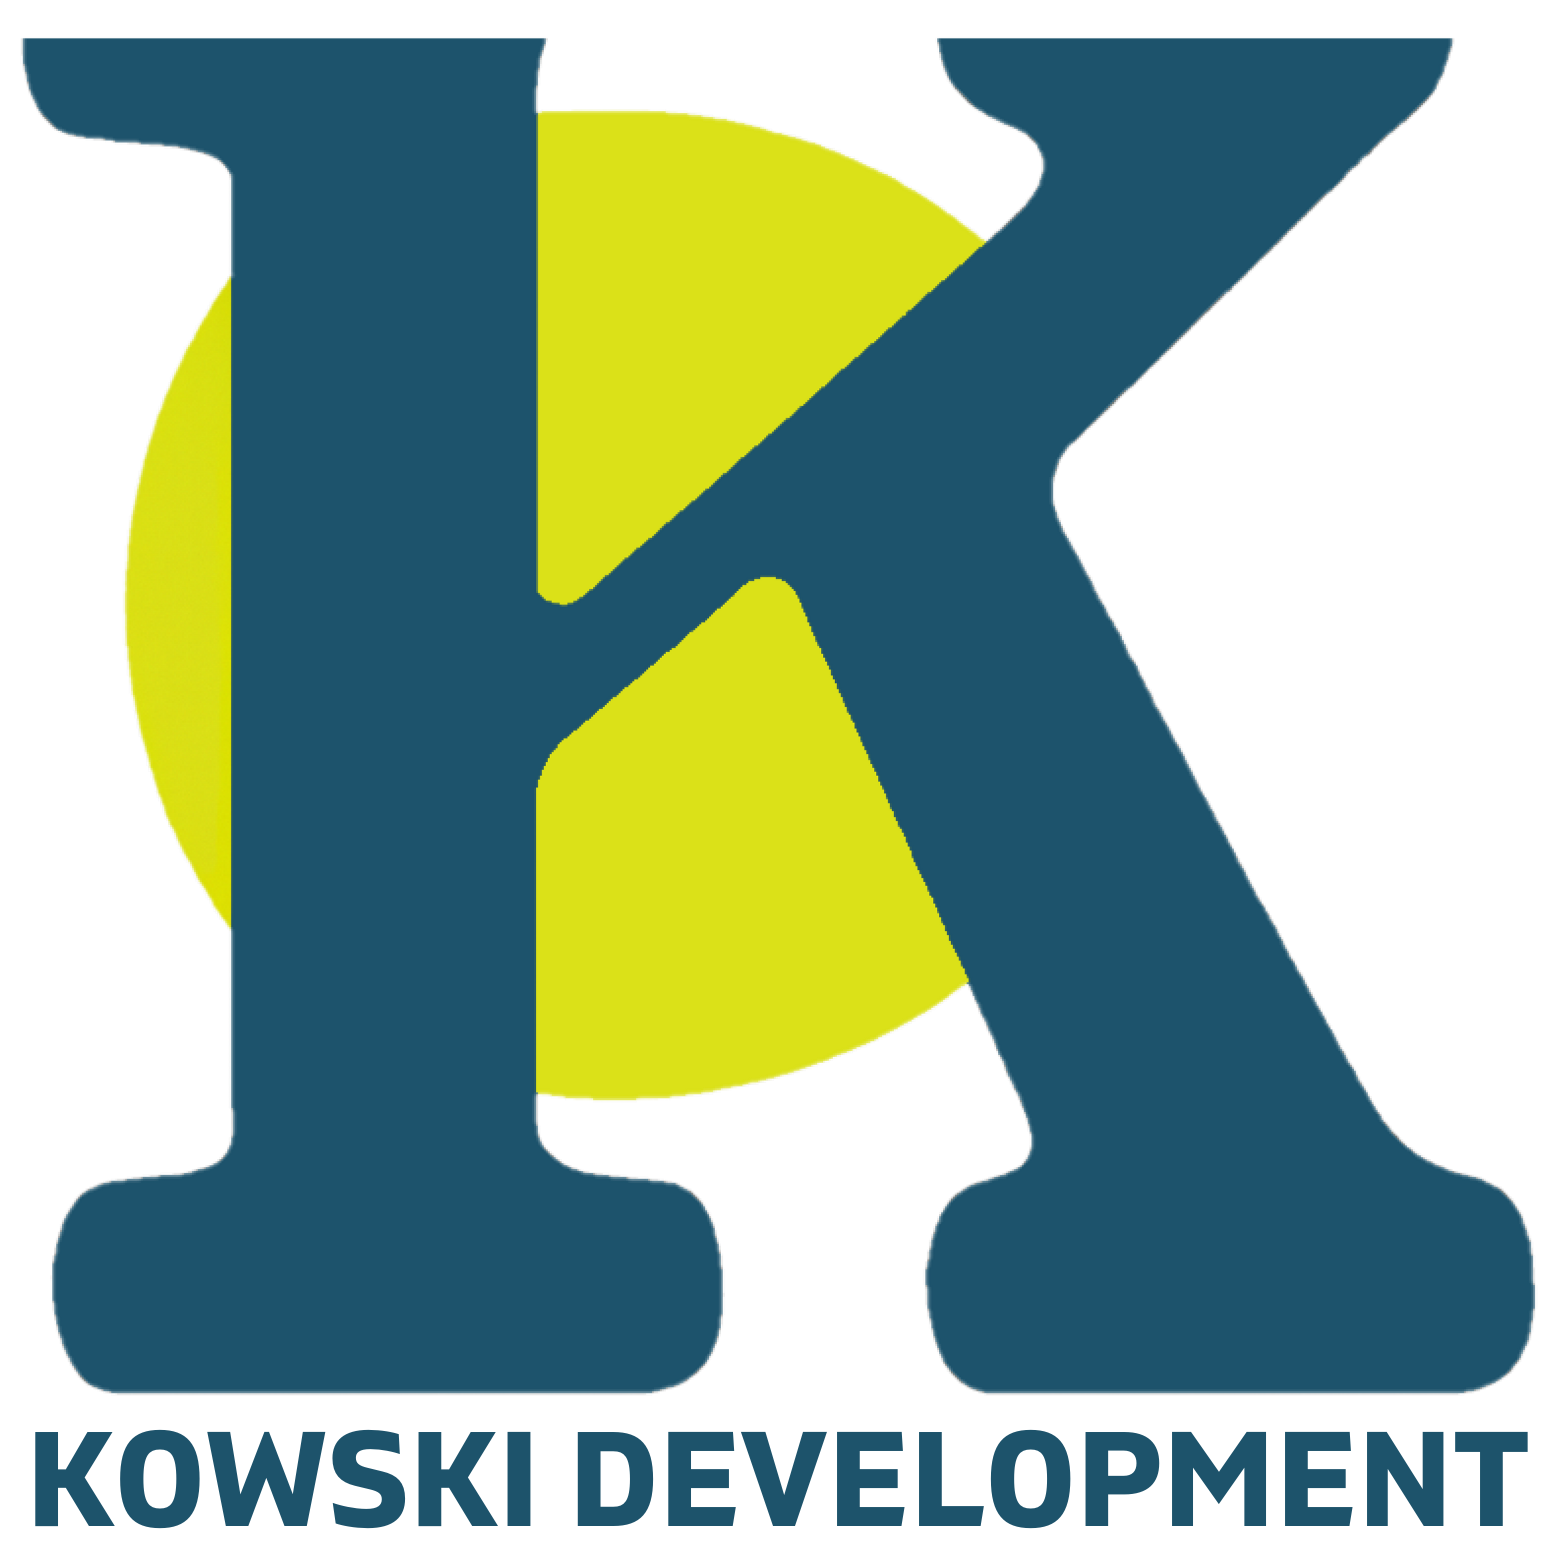 Kowski Development